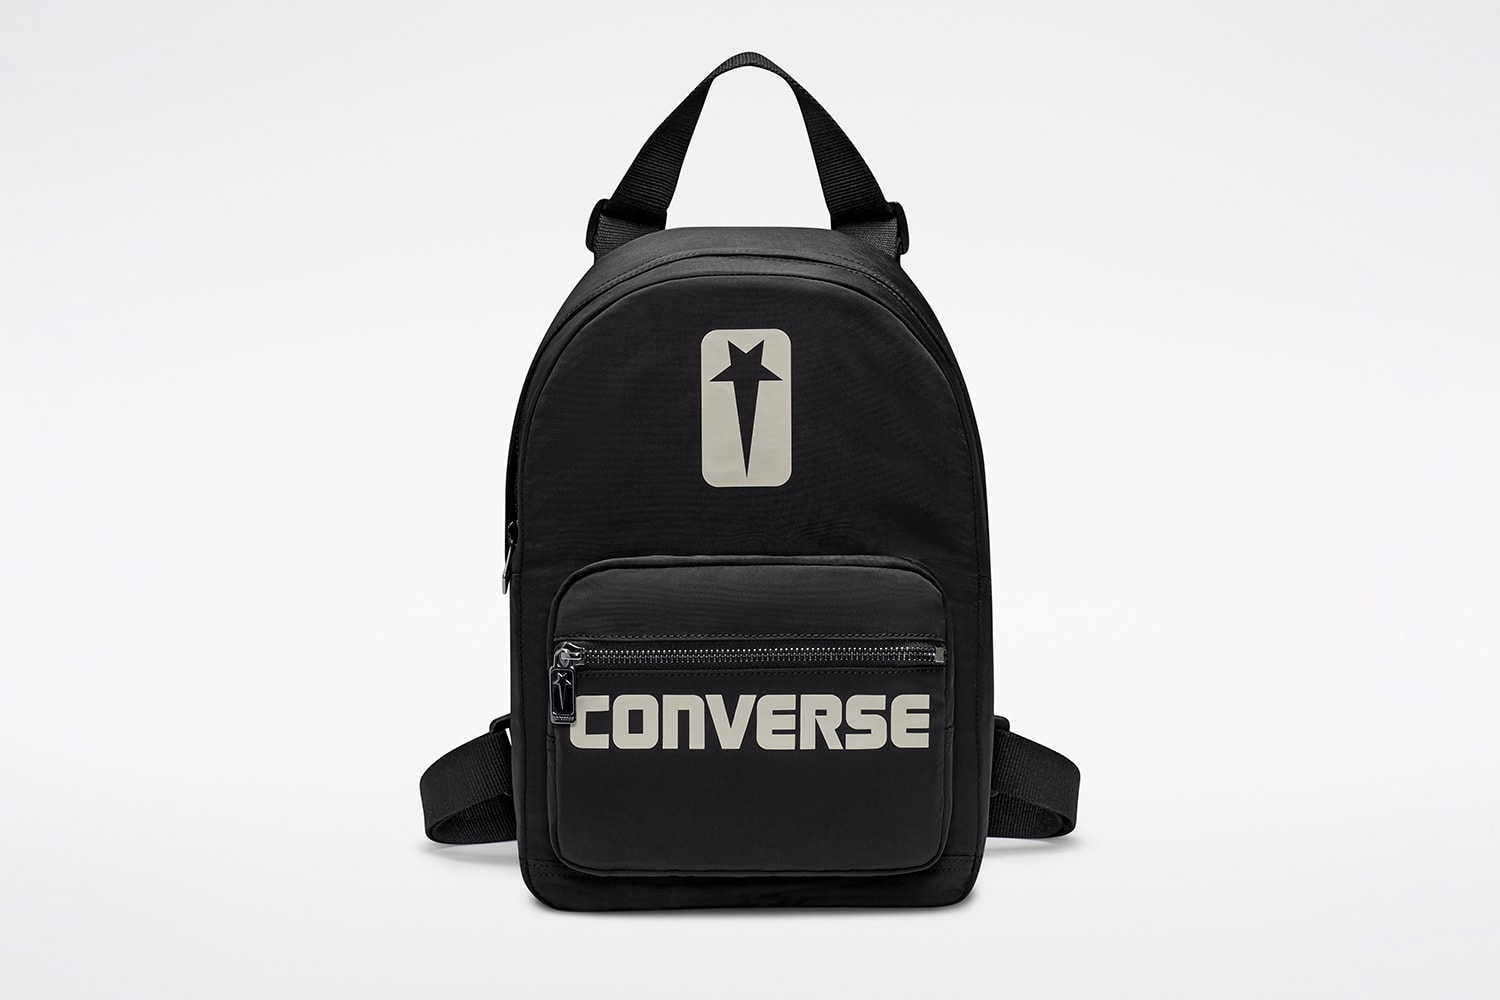 Converse x DRKSHDW 全新「DRKSTAR」合作系列正式登场